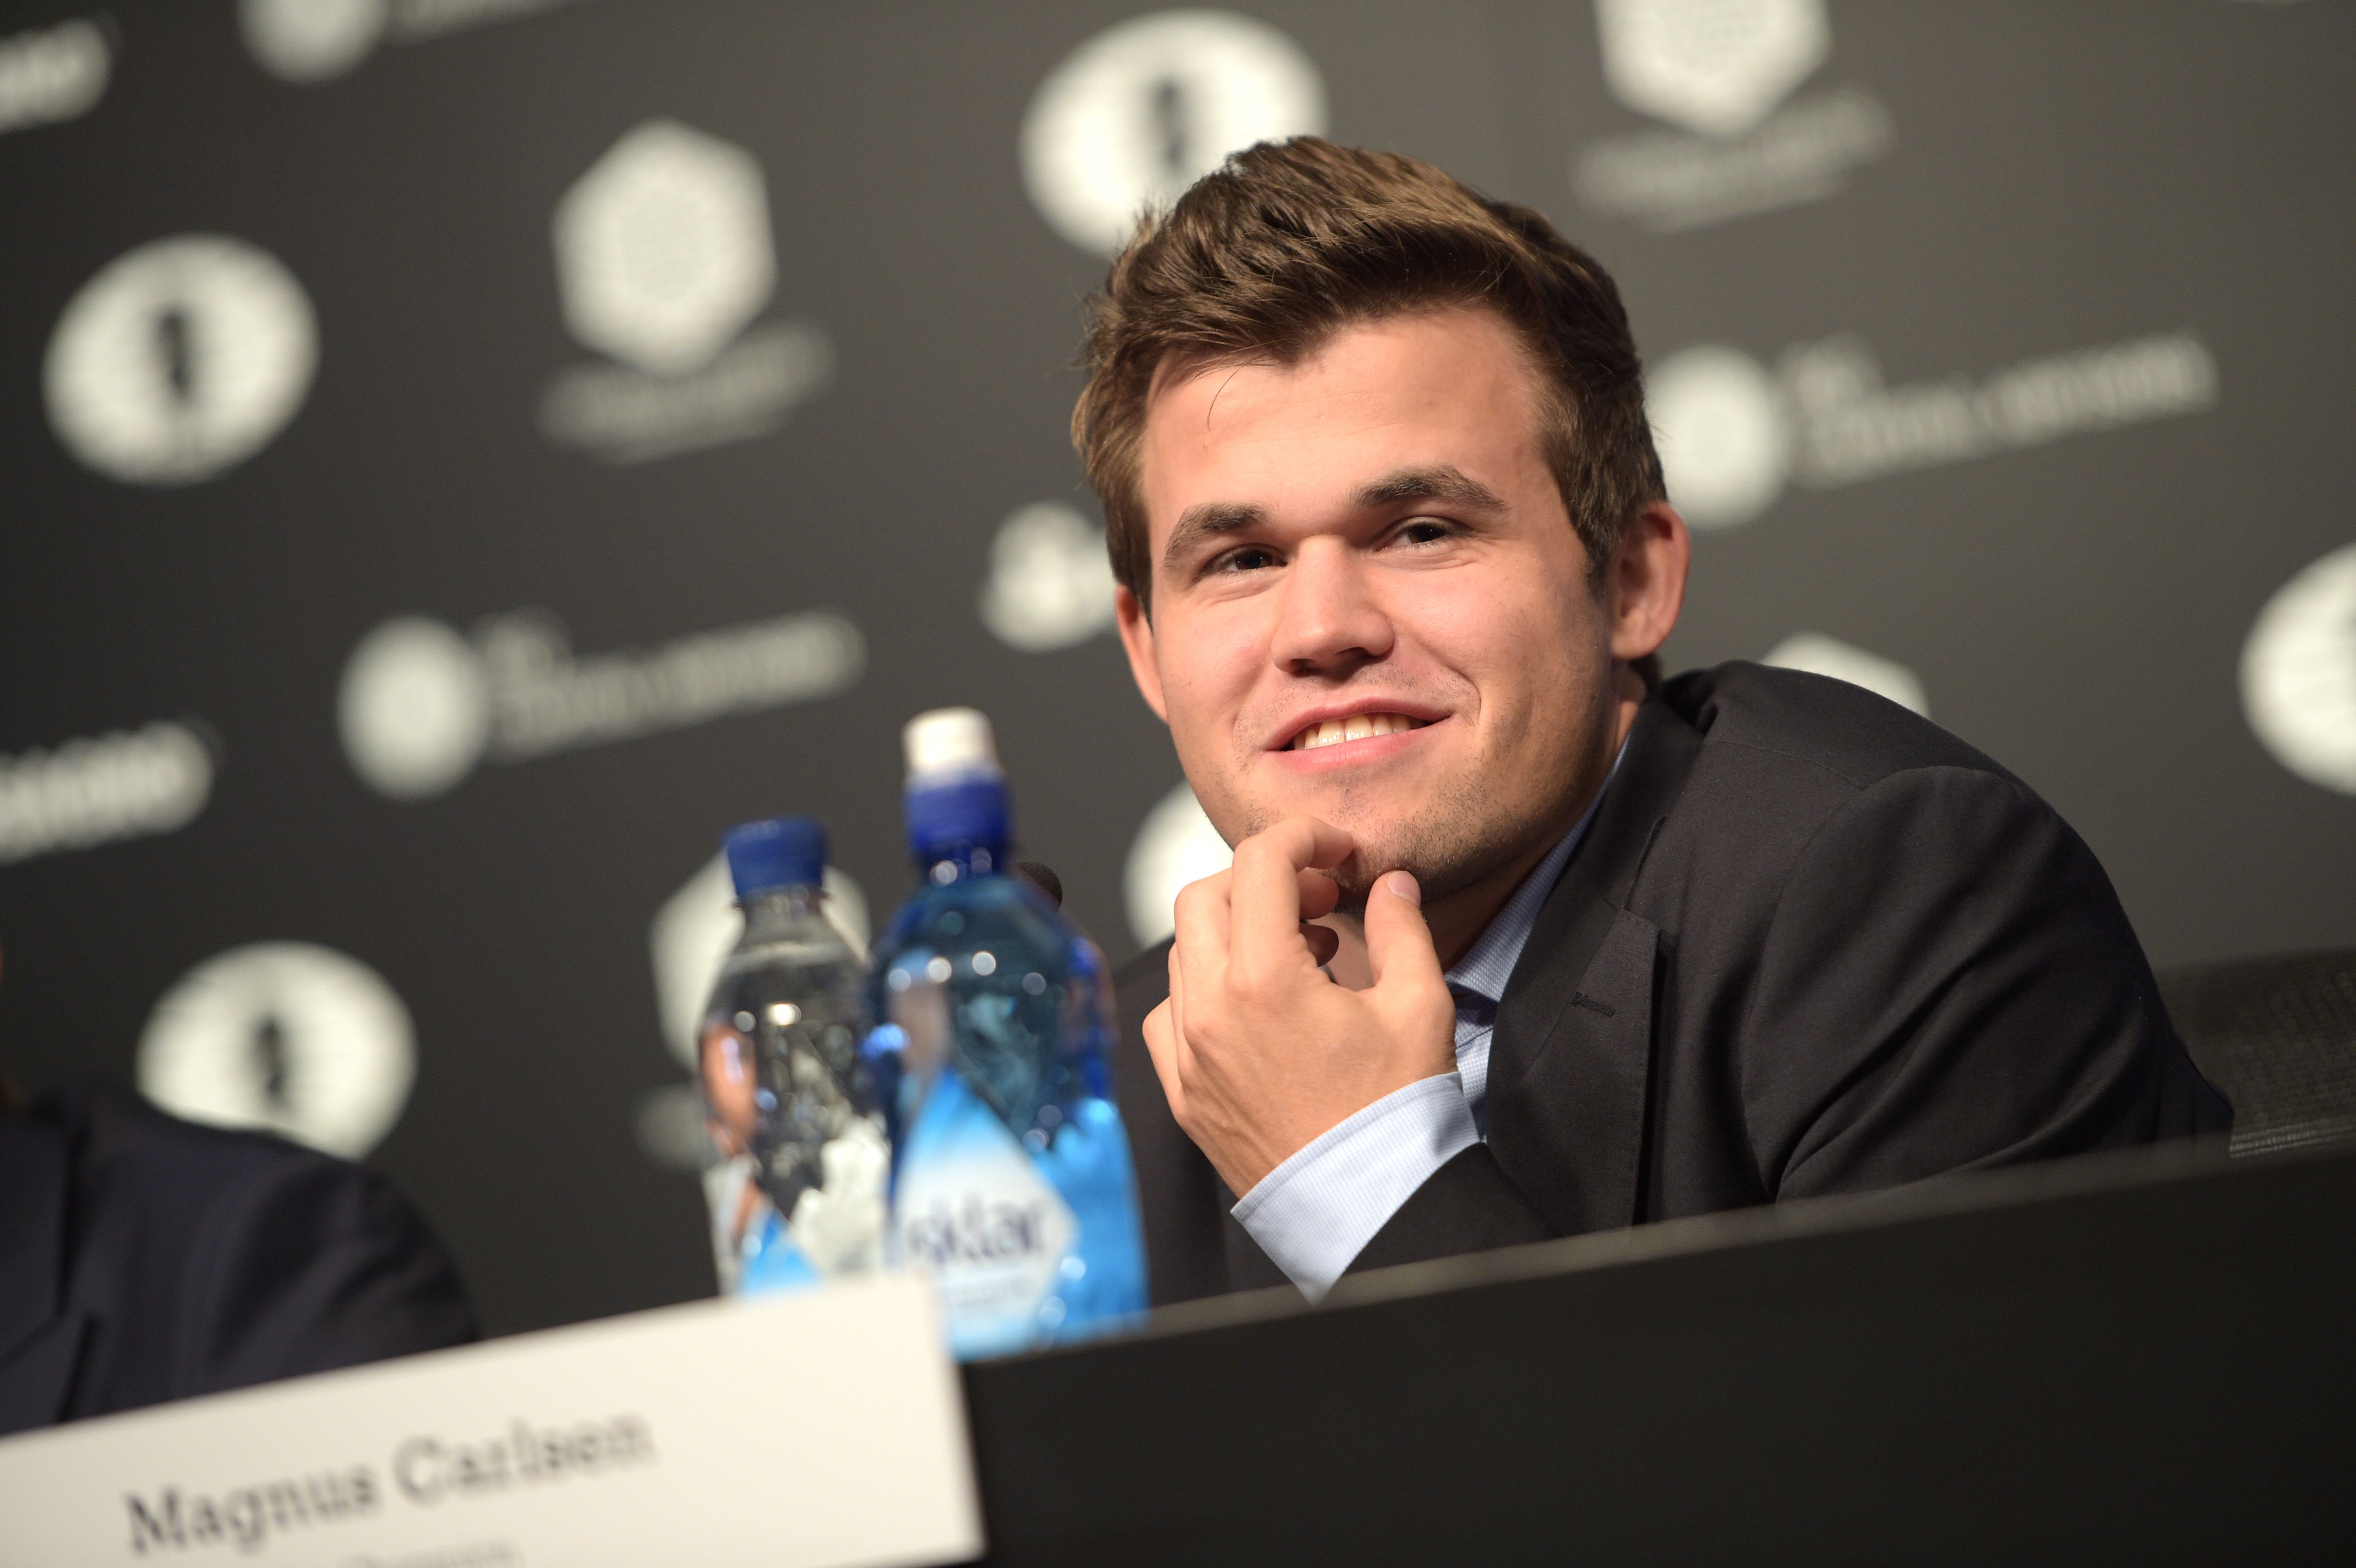 Why did Magnus Carlsen Smile? #chess #chesstok #chessmaster #chesslove